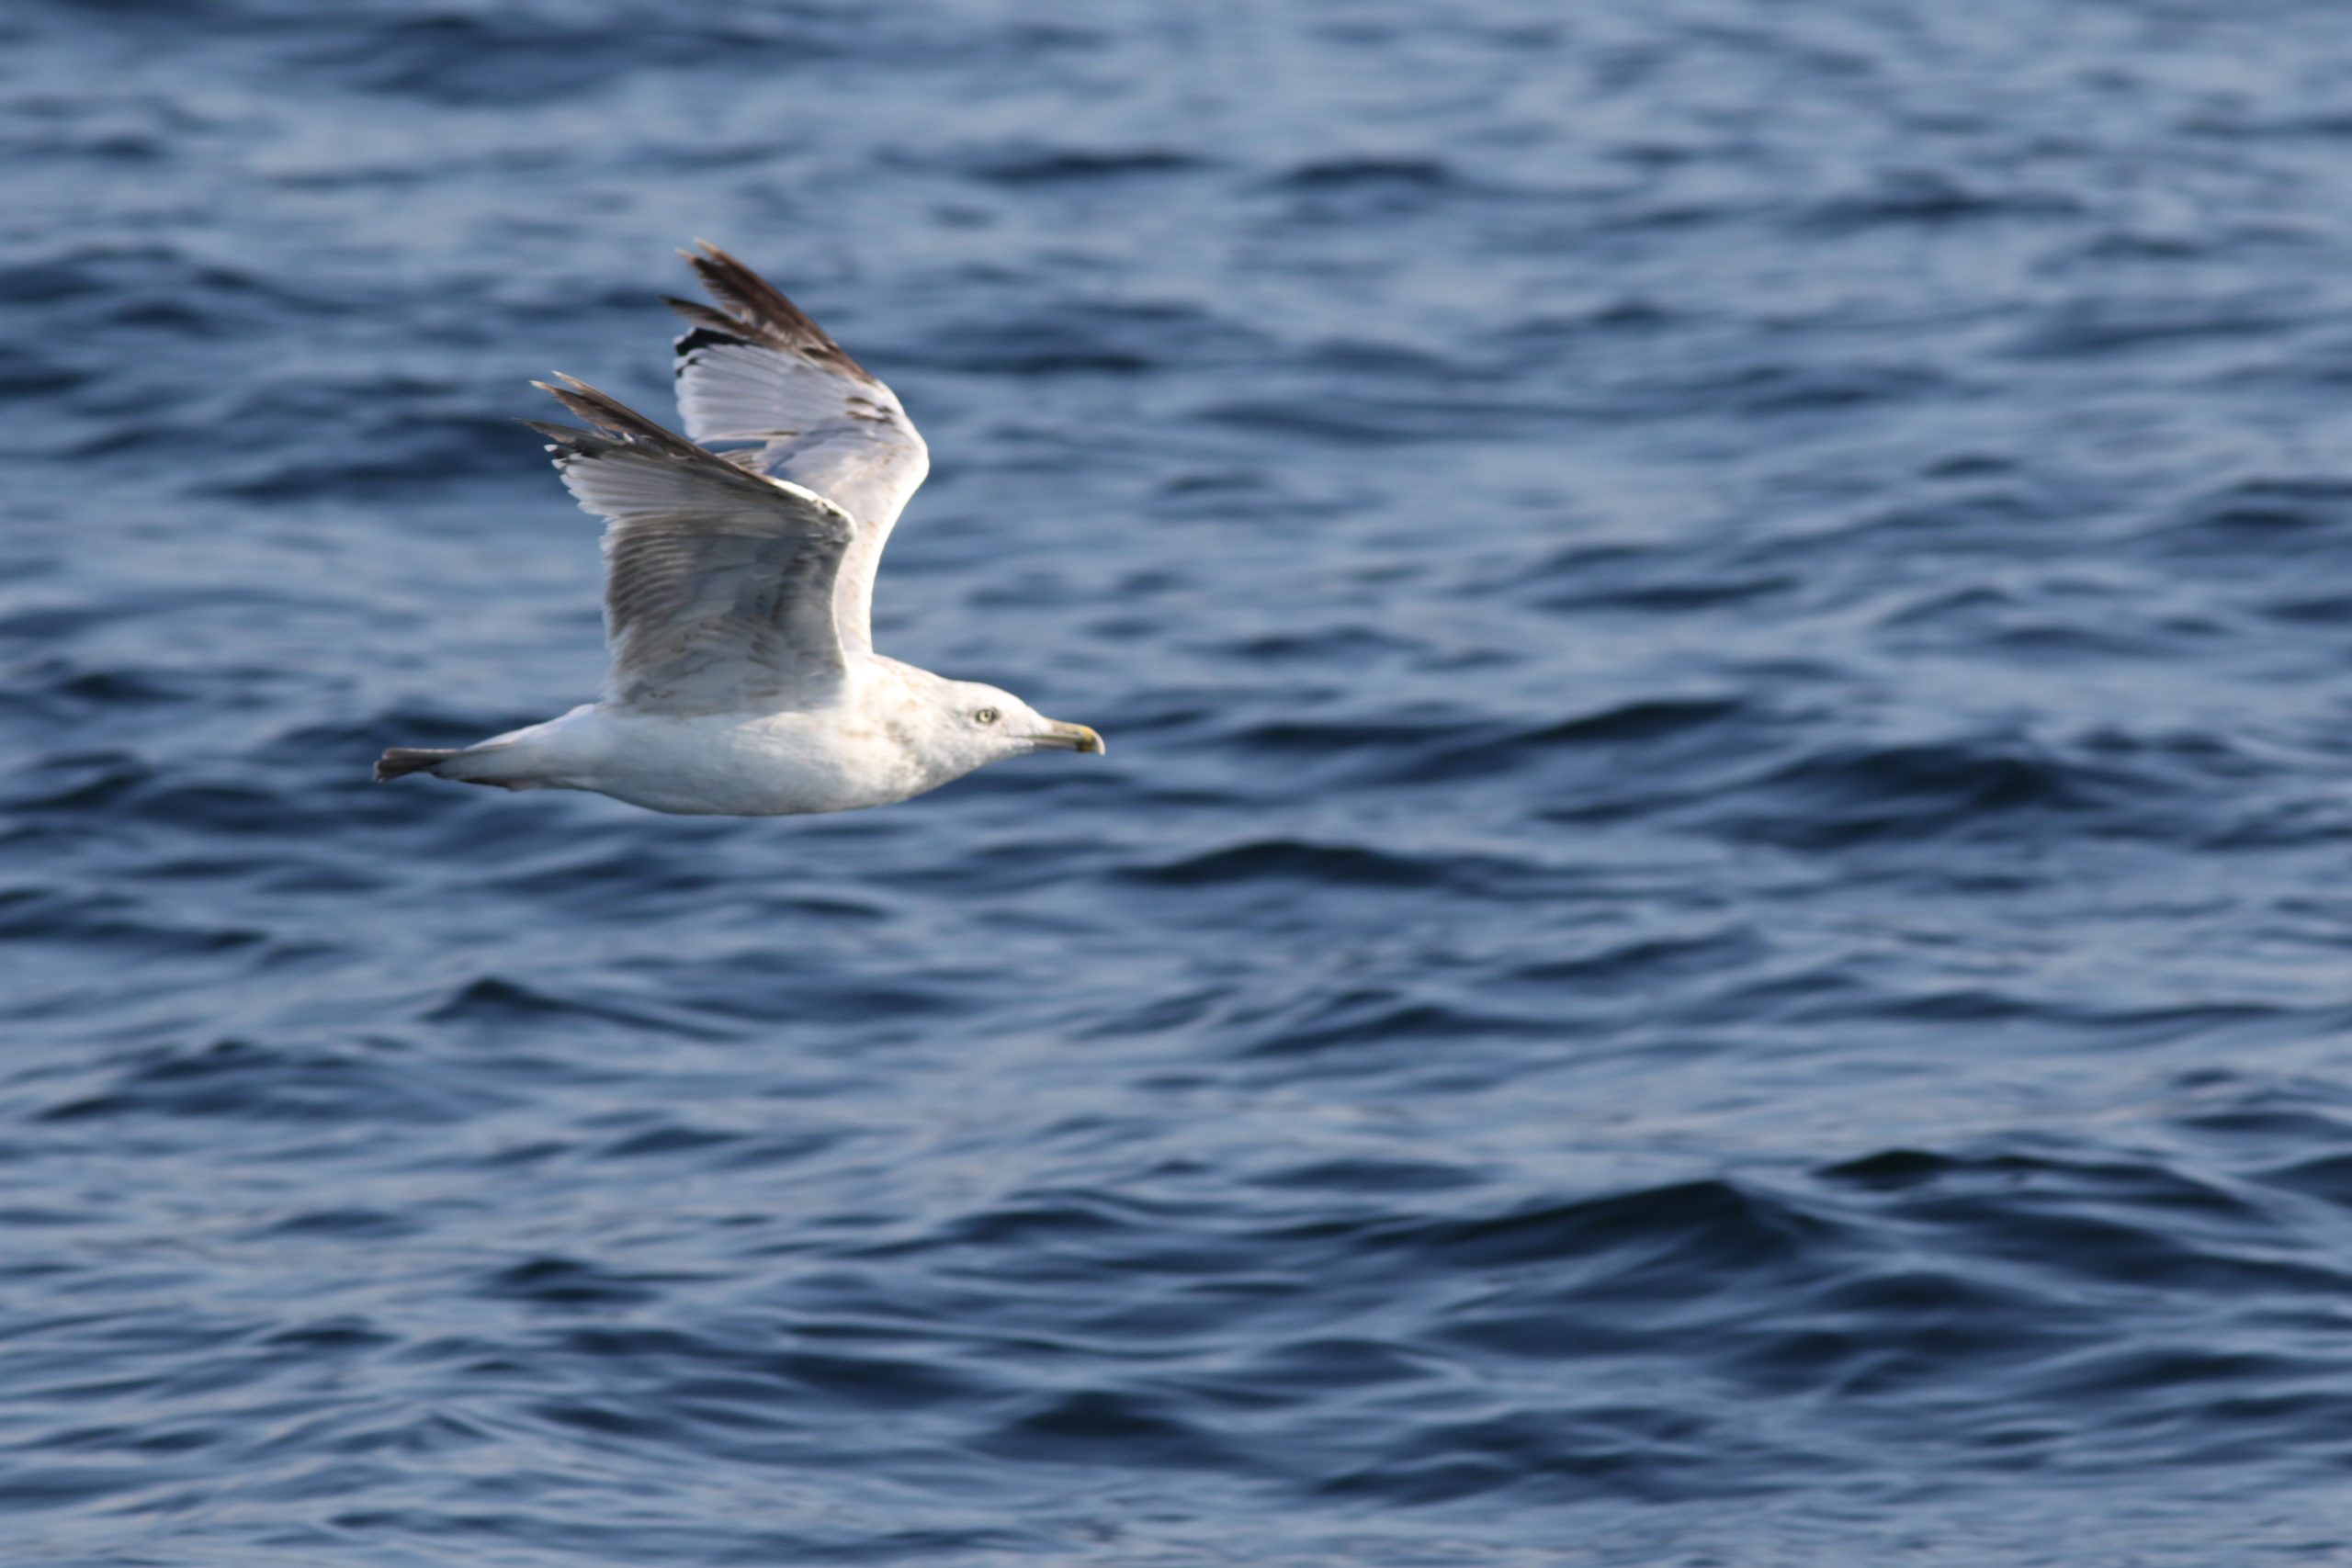 A gull glides above the ocean.